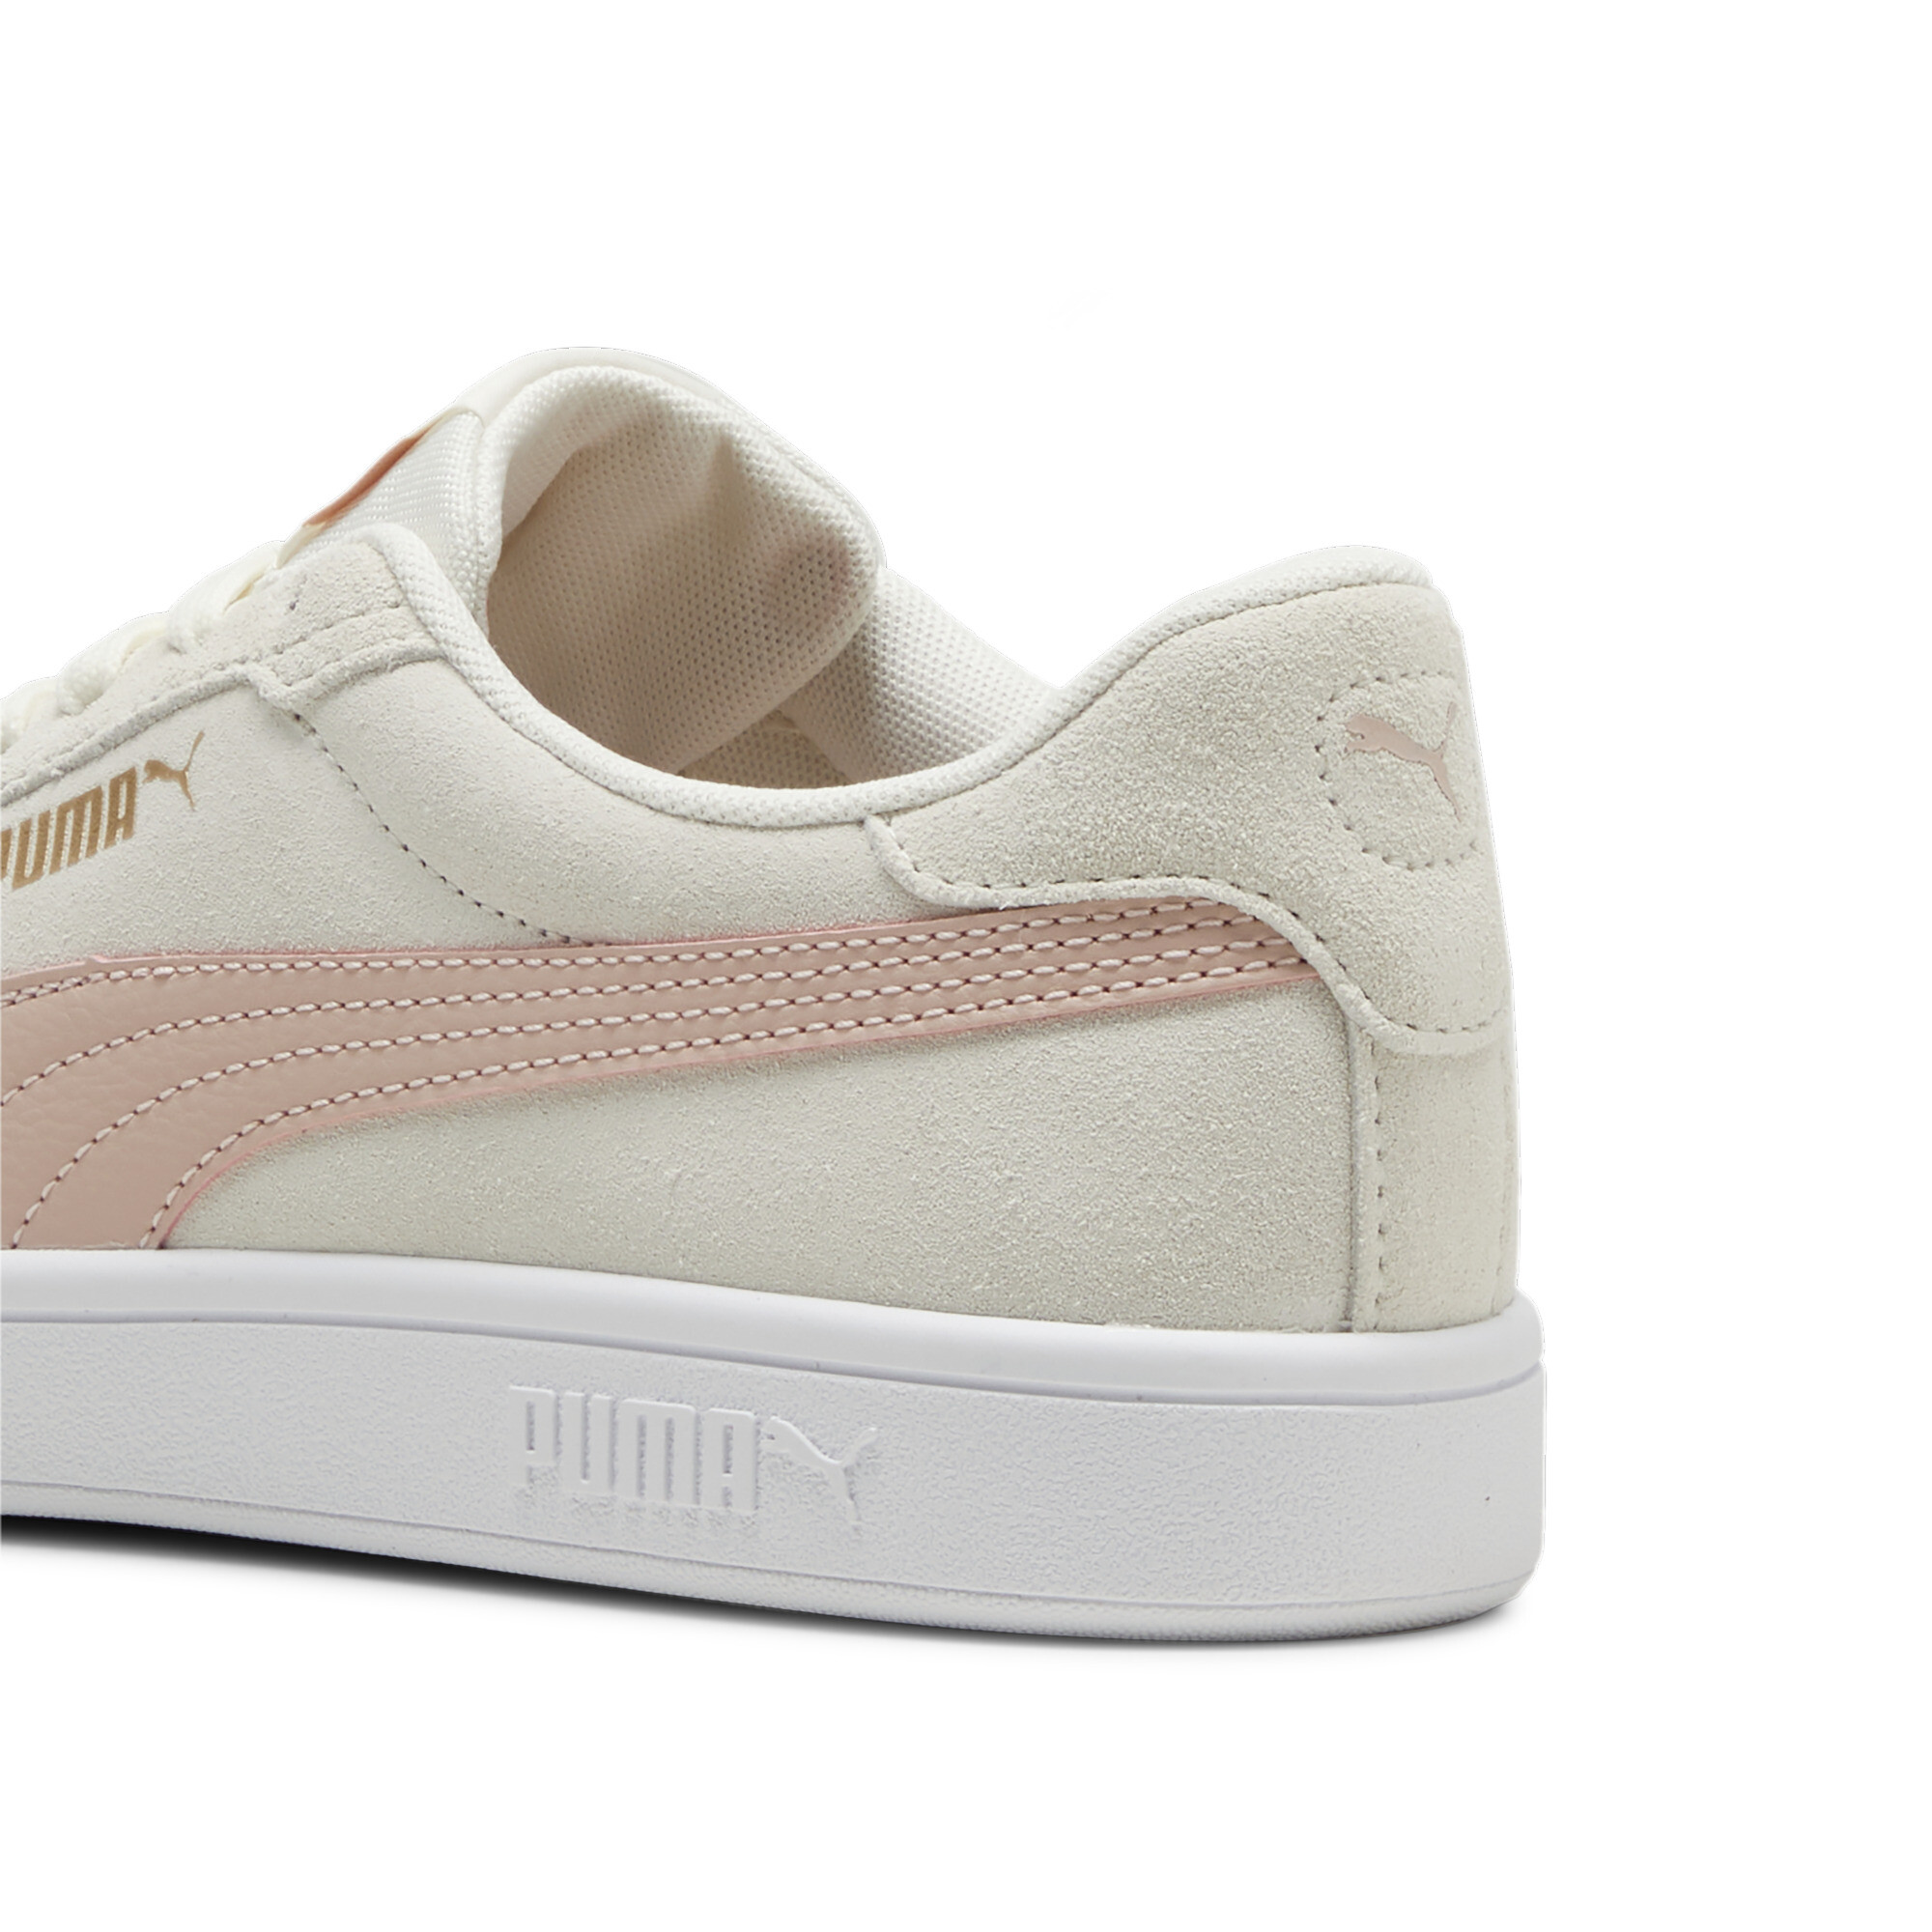 Puma Smash 3.0 Sneakers, White, Size 45, Shoes